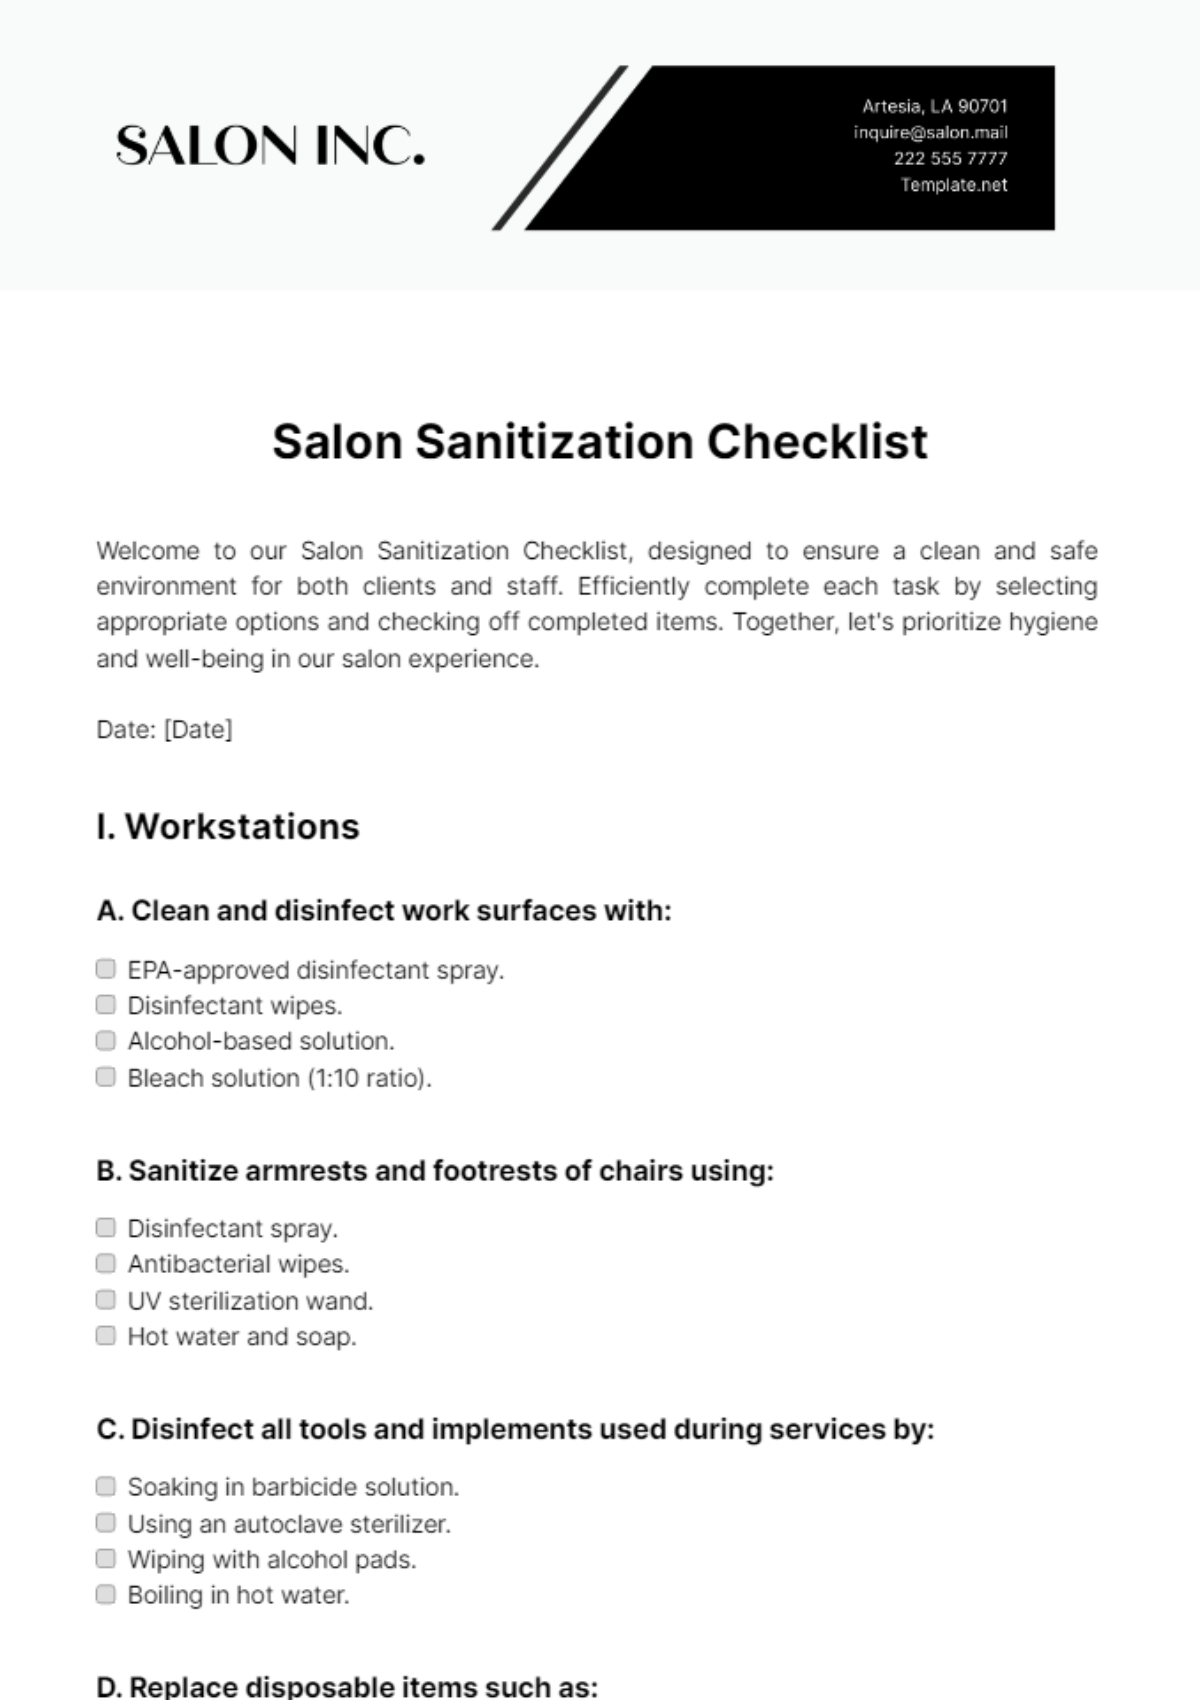 Free Salon Sanitization Checklist Template